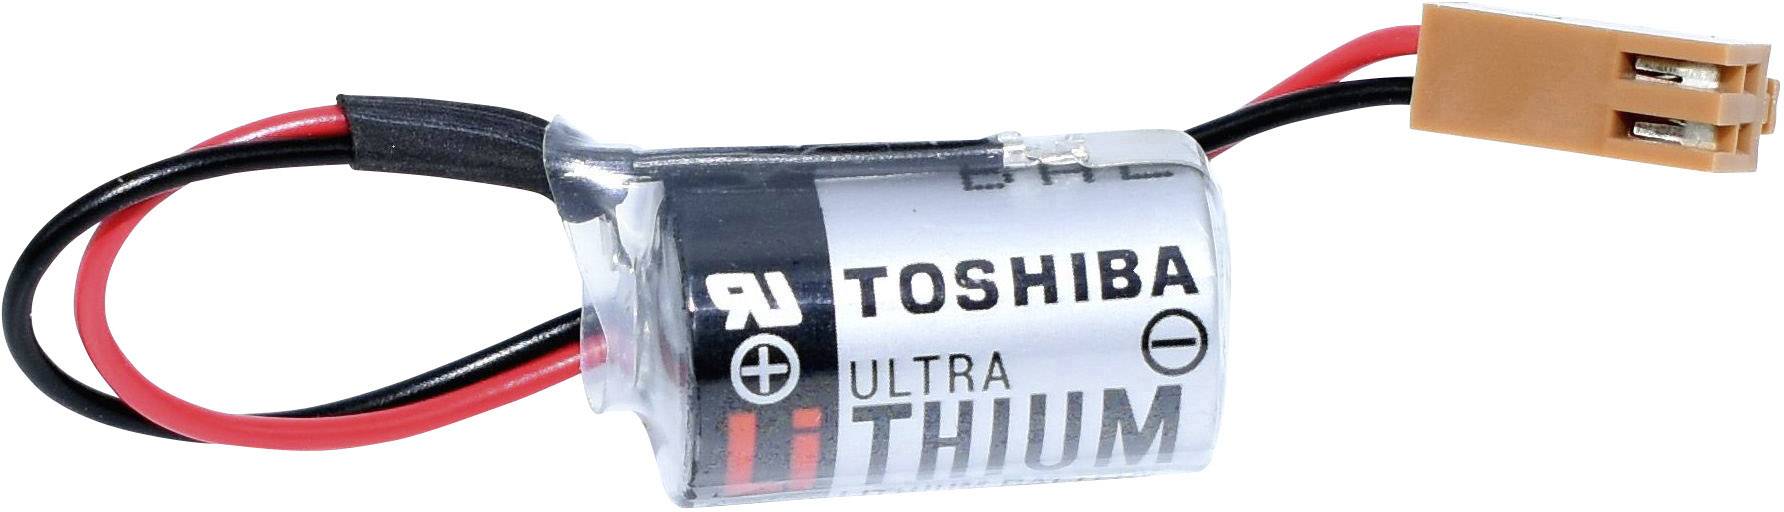 BELTRONA Spezial-Batterie Stecker Lithium Beltrona Fuji Micrex-F/SX Toshiba 3.6 V 1200 mAh 1 St.